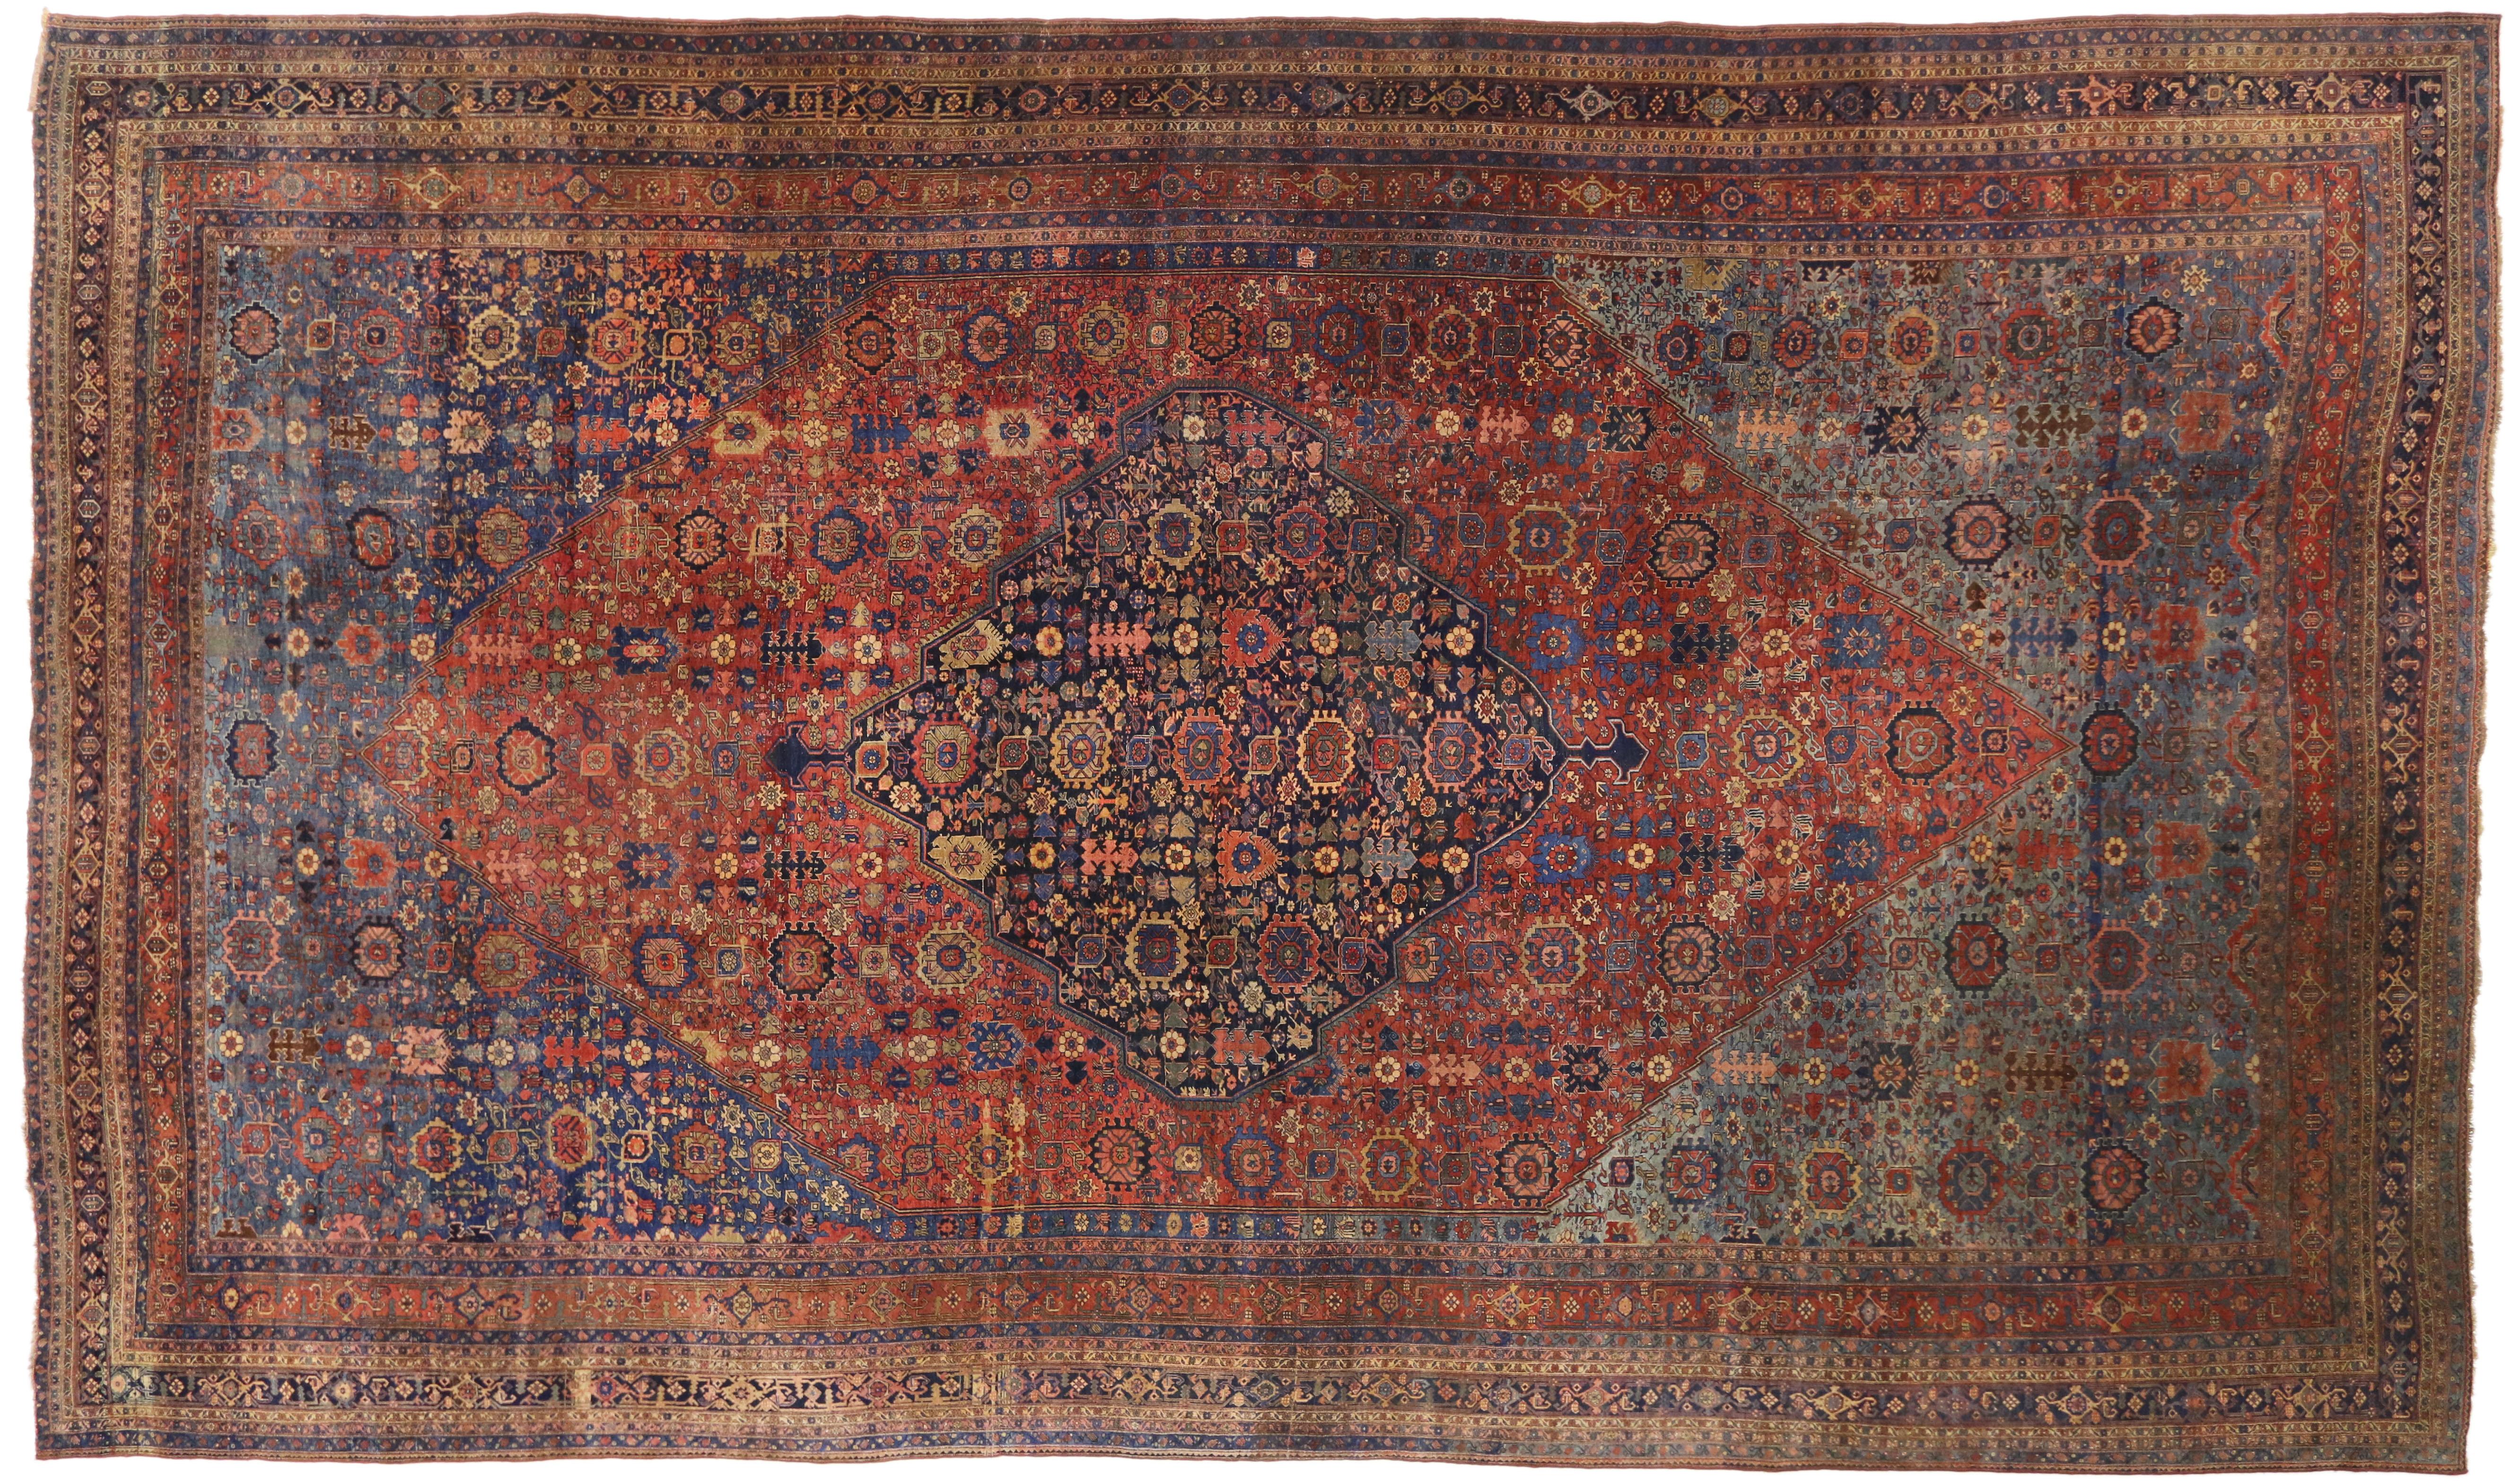 19th Century 1870s Antique Persian Halwai Bijar Rug Hotel Lobby Size Carpet For Sale